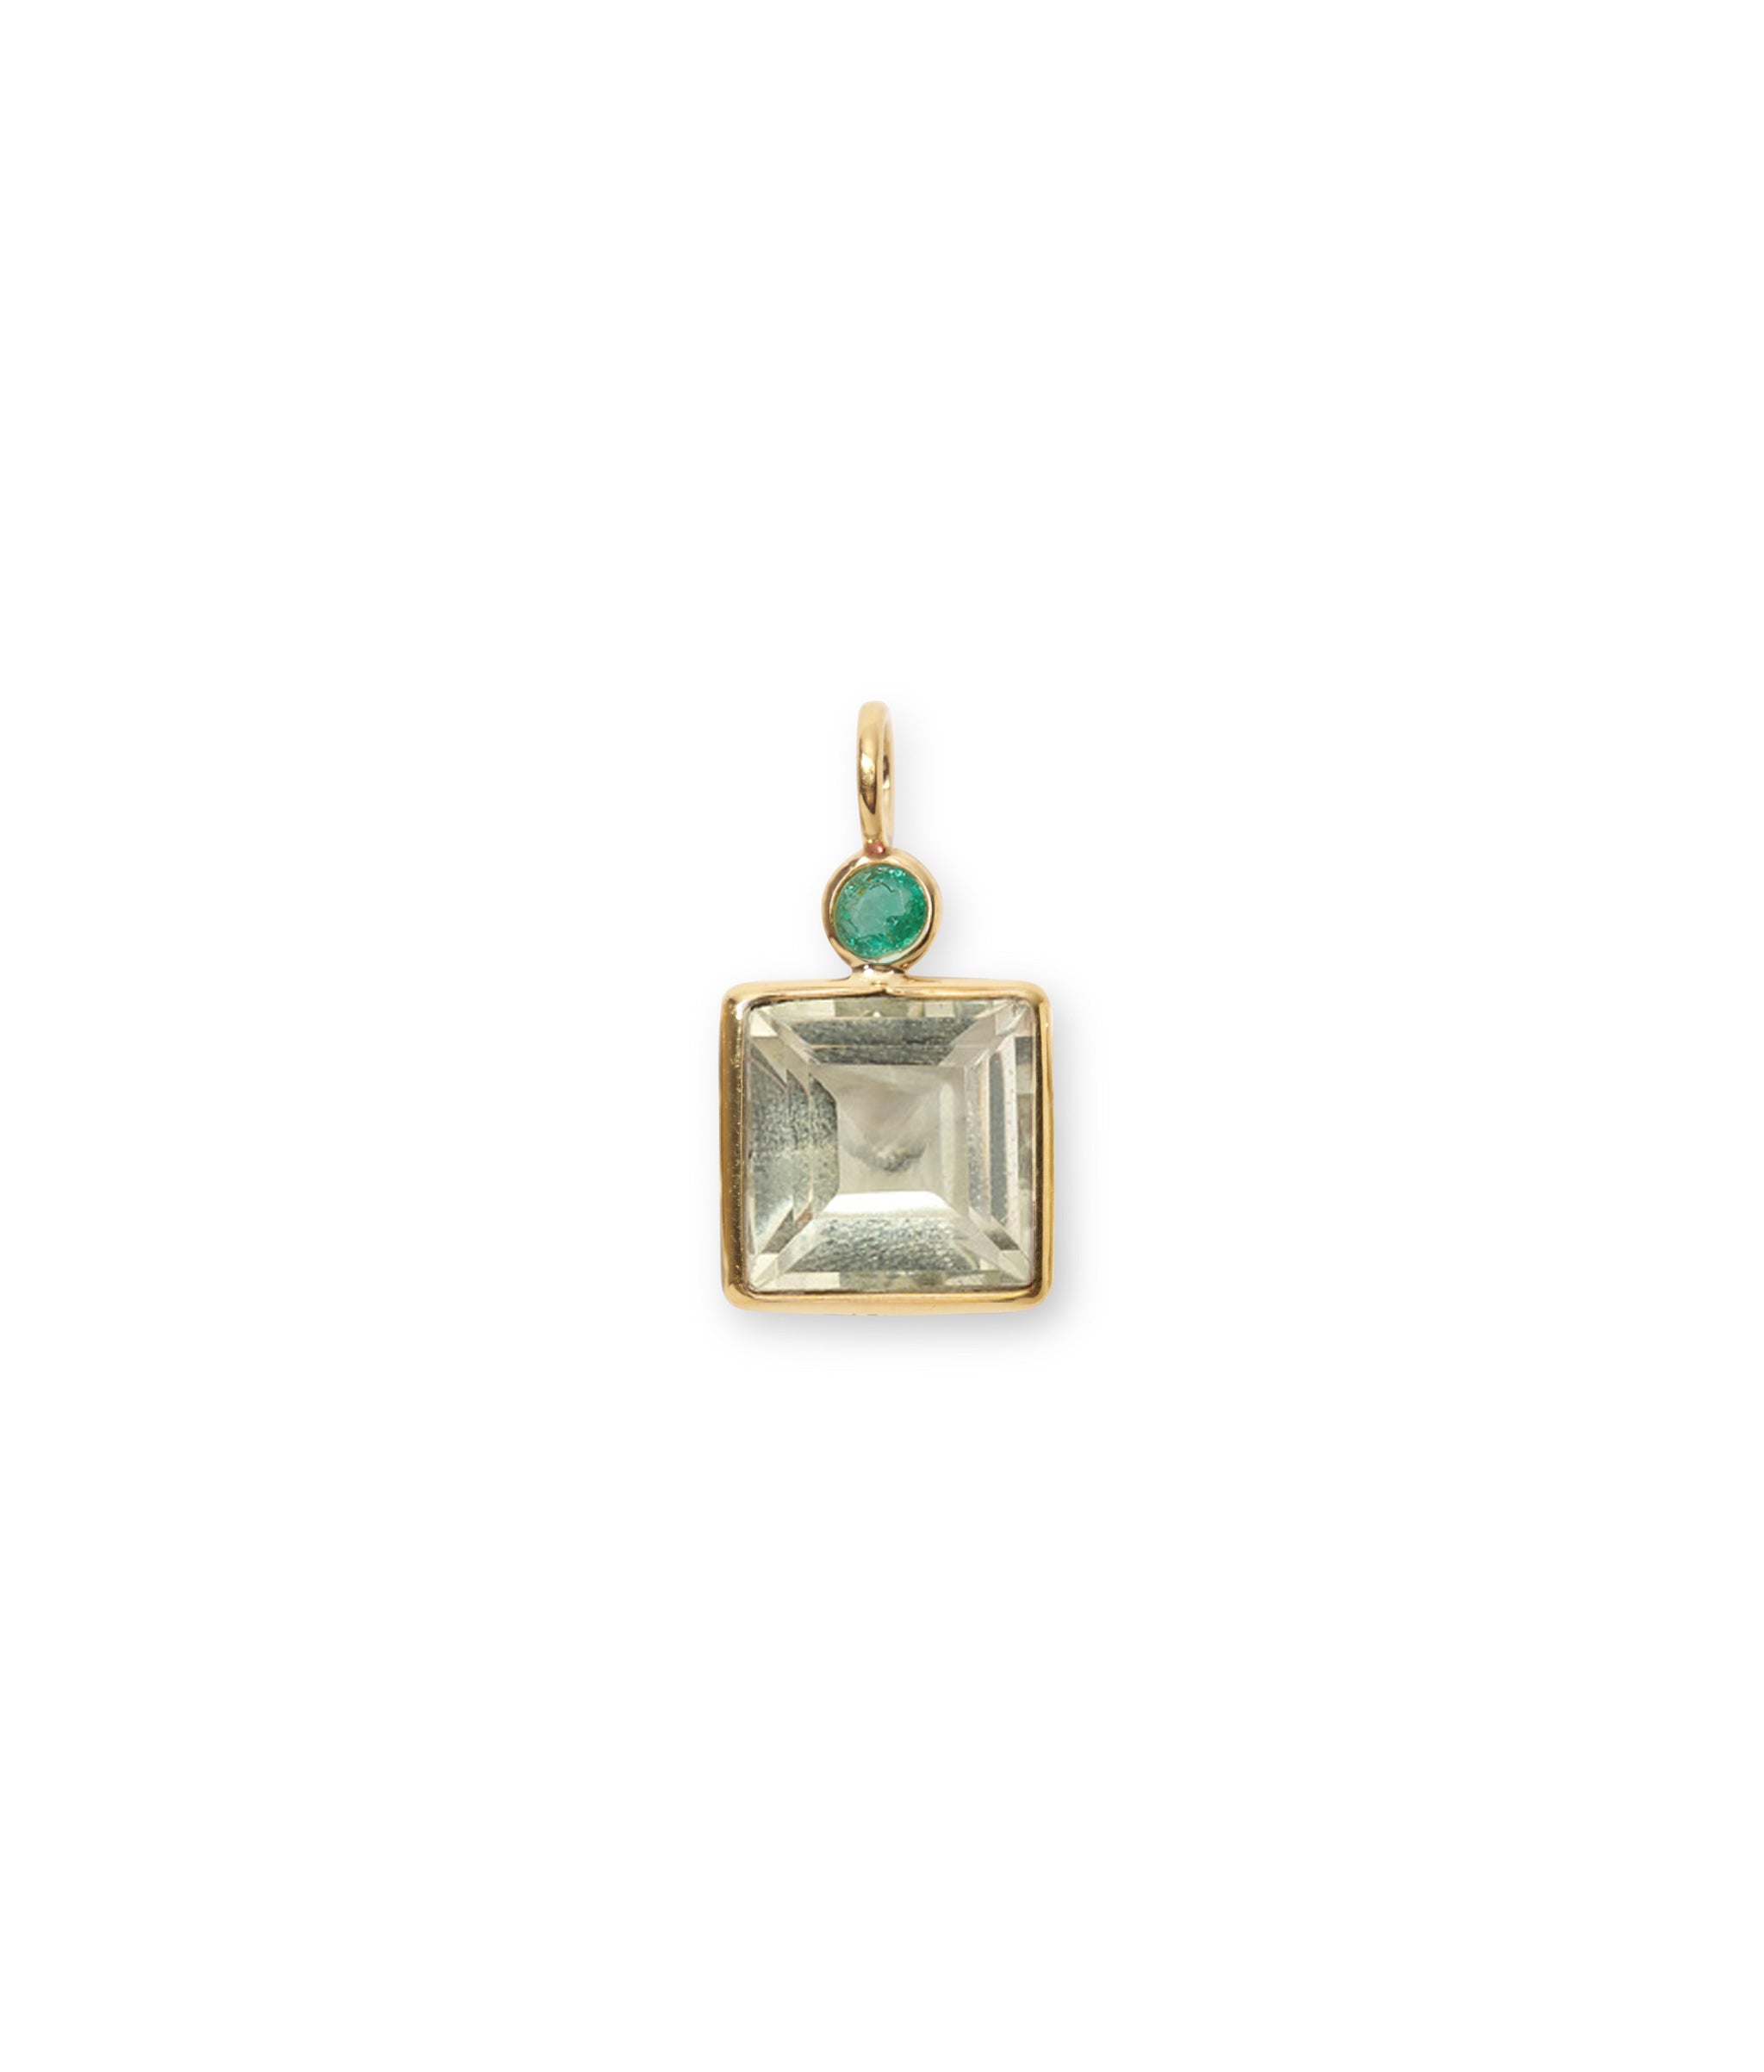 Emerald & Green Amethyst 14k Gold Necklace Charm. Faceted emerald and green amethyst square with gold bezels